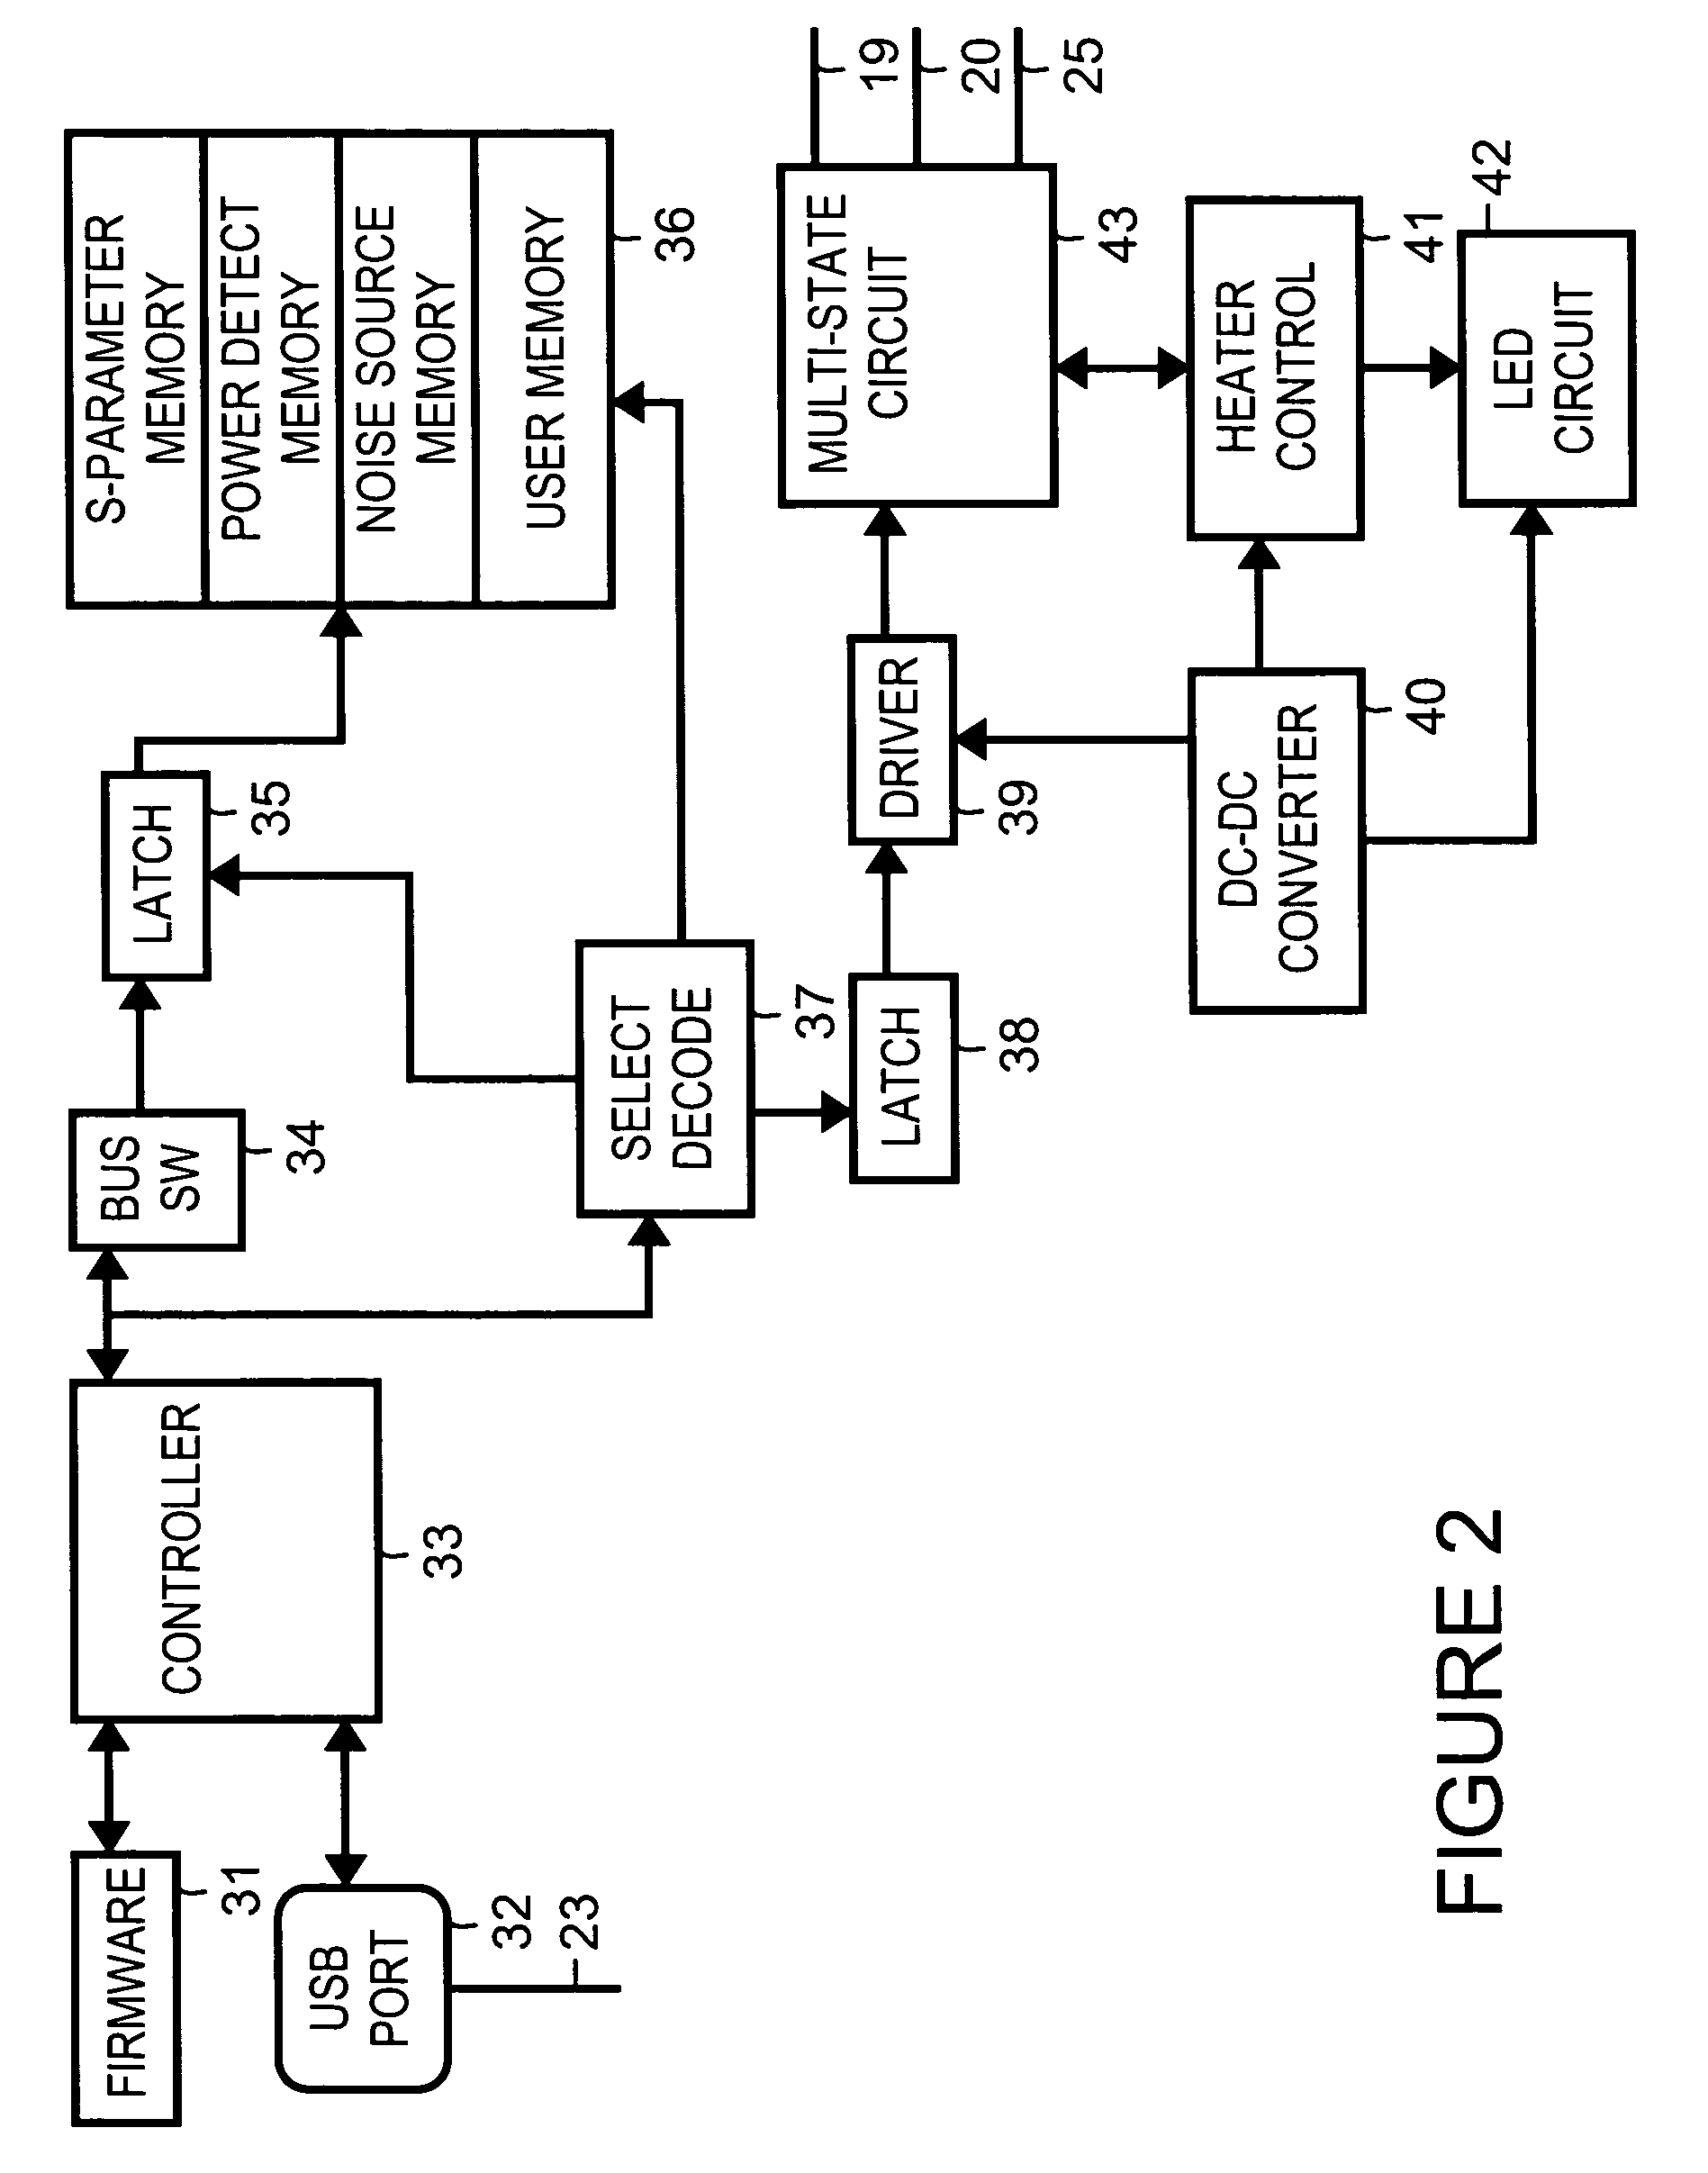 Automated electronic calibration apparatus